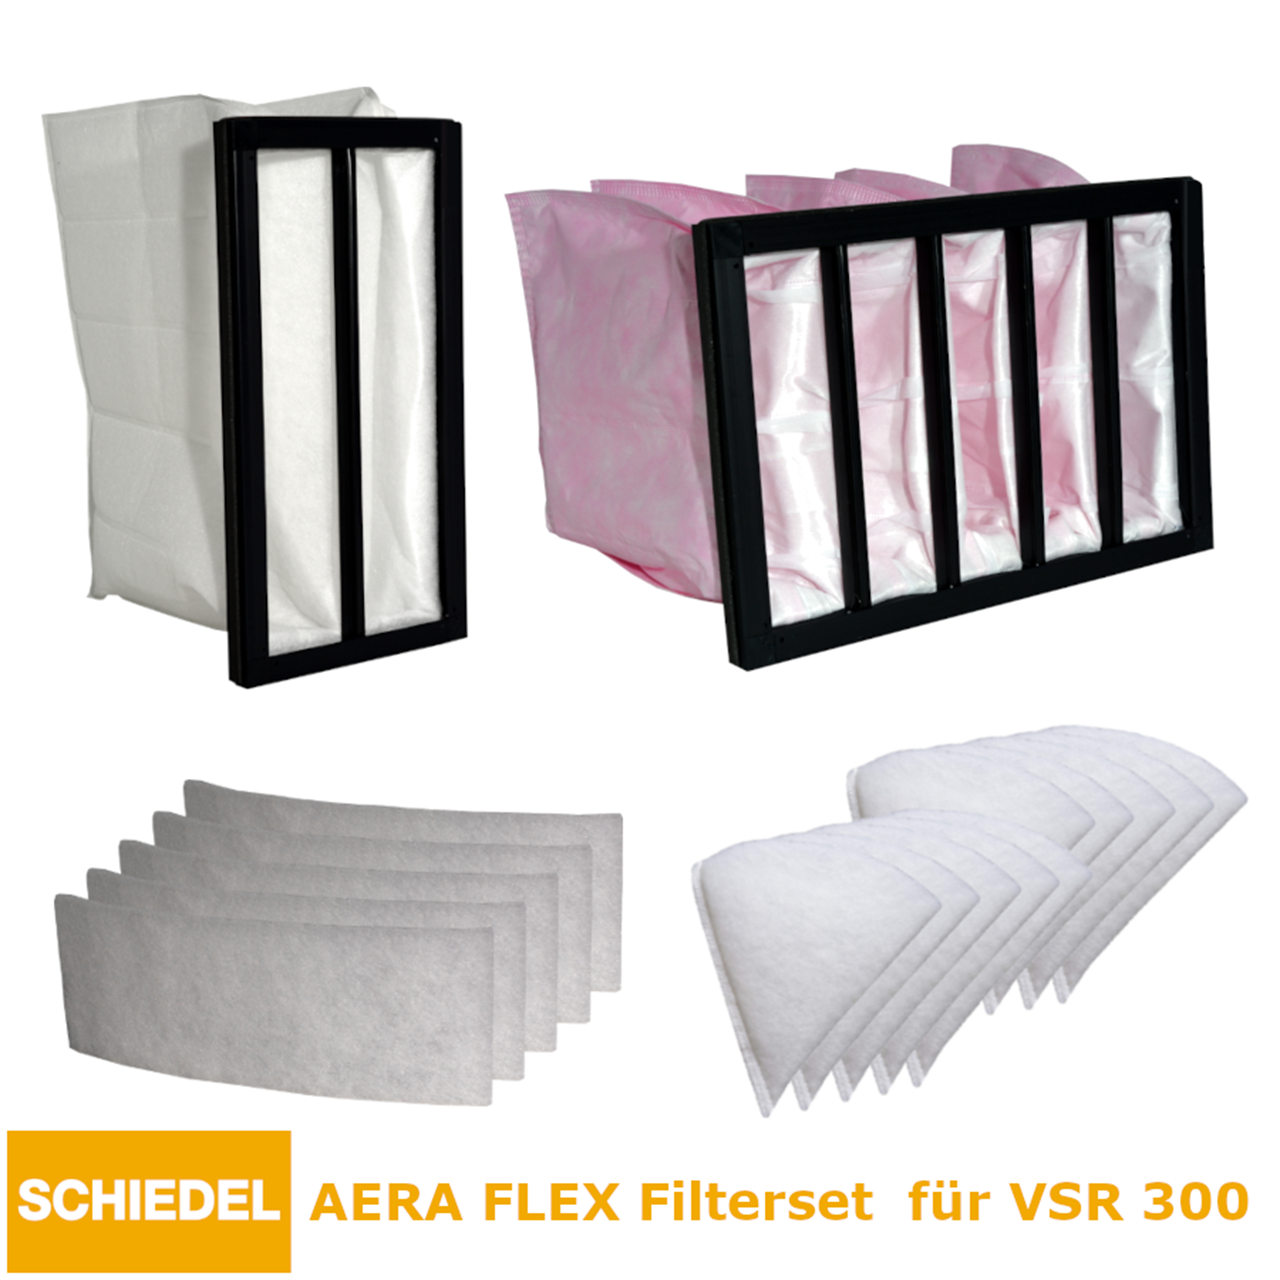 AERA FLEX Filterset für VSR 300 124125